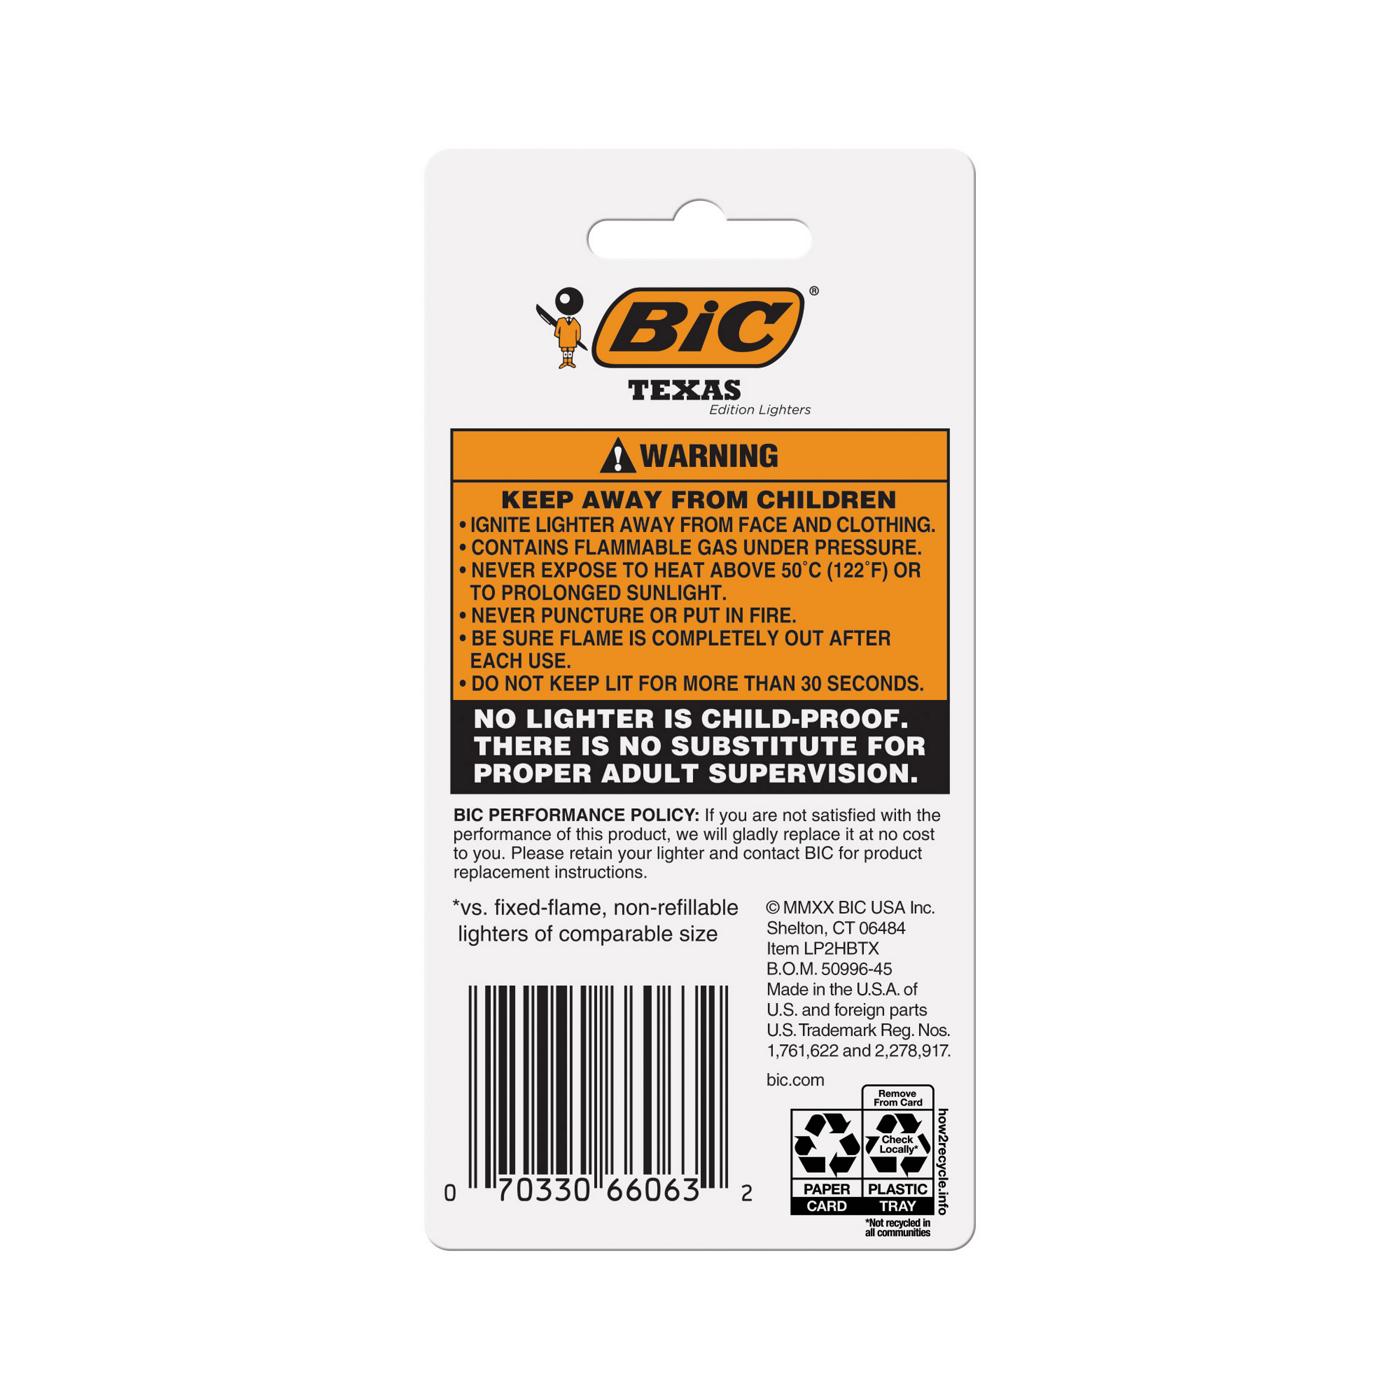 BIC Multi-Purpose Design Edition Texas Lighter; image 2 of 2